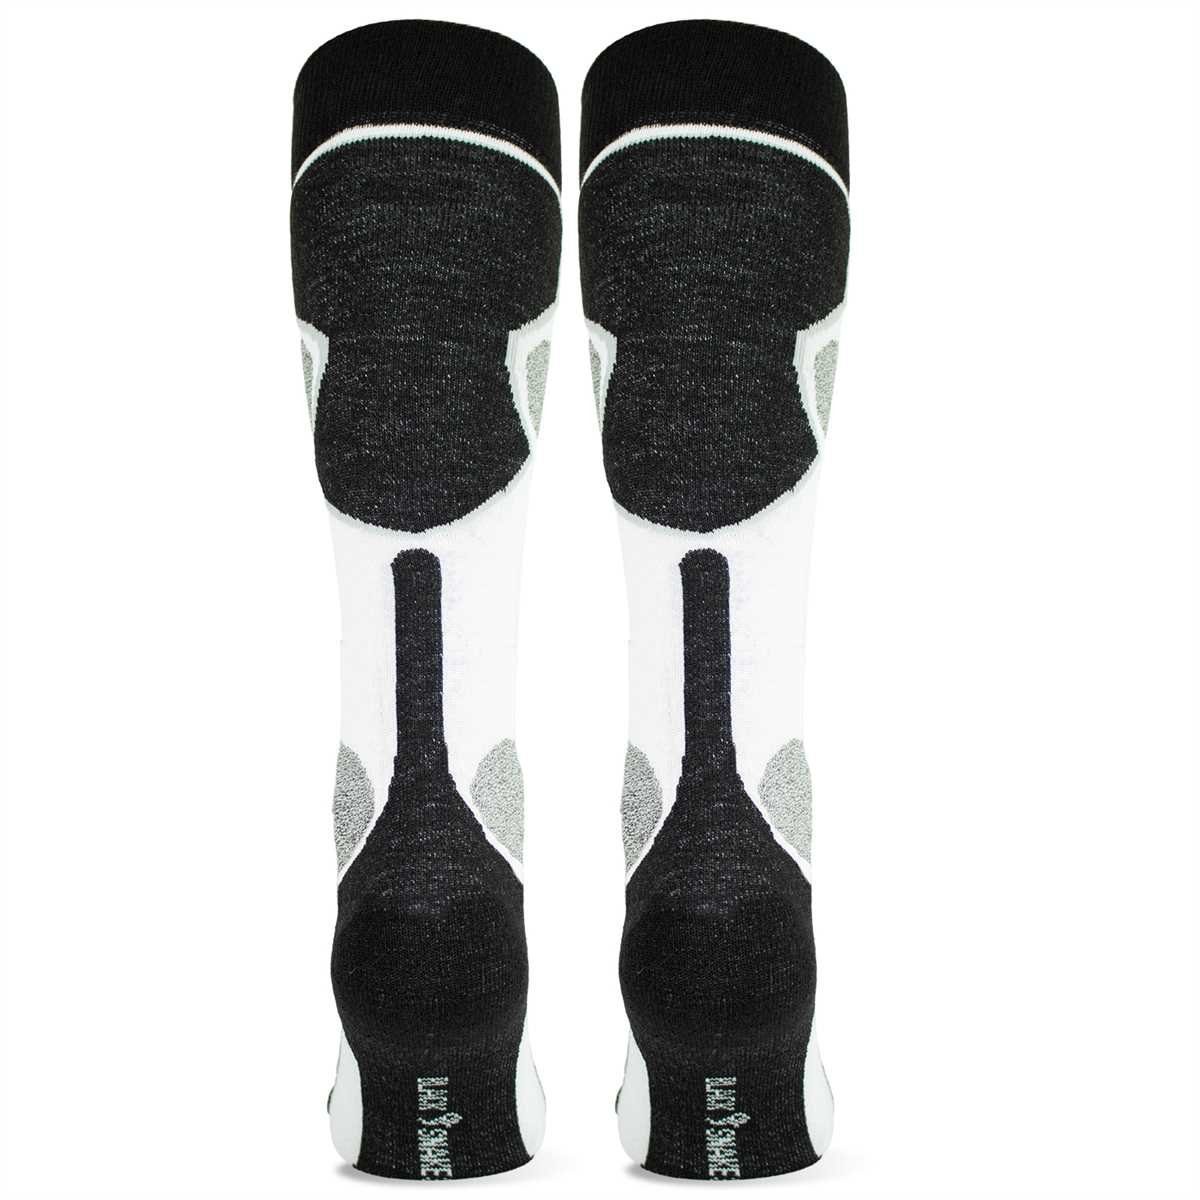 Black Snake Skisocken high protection gepolsterte Snowboard Ski Sportsocken (2-Paar) Schwarz/Weiß Funktionssocken